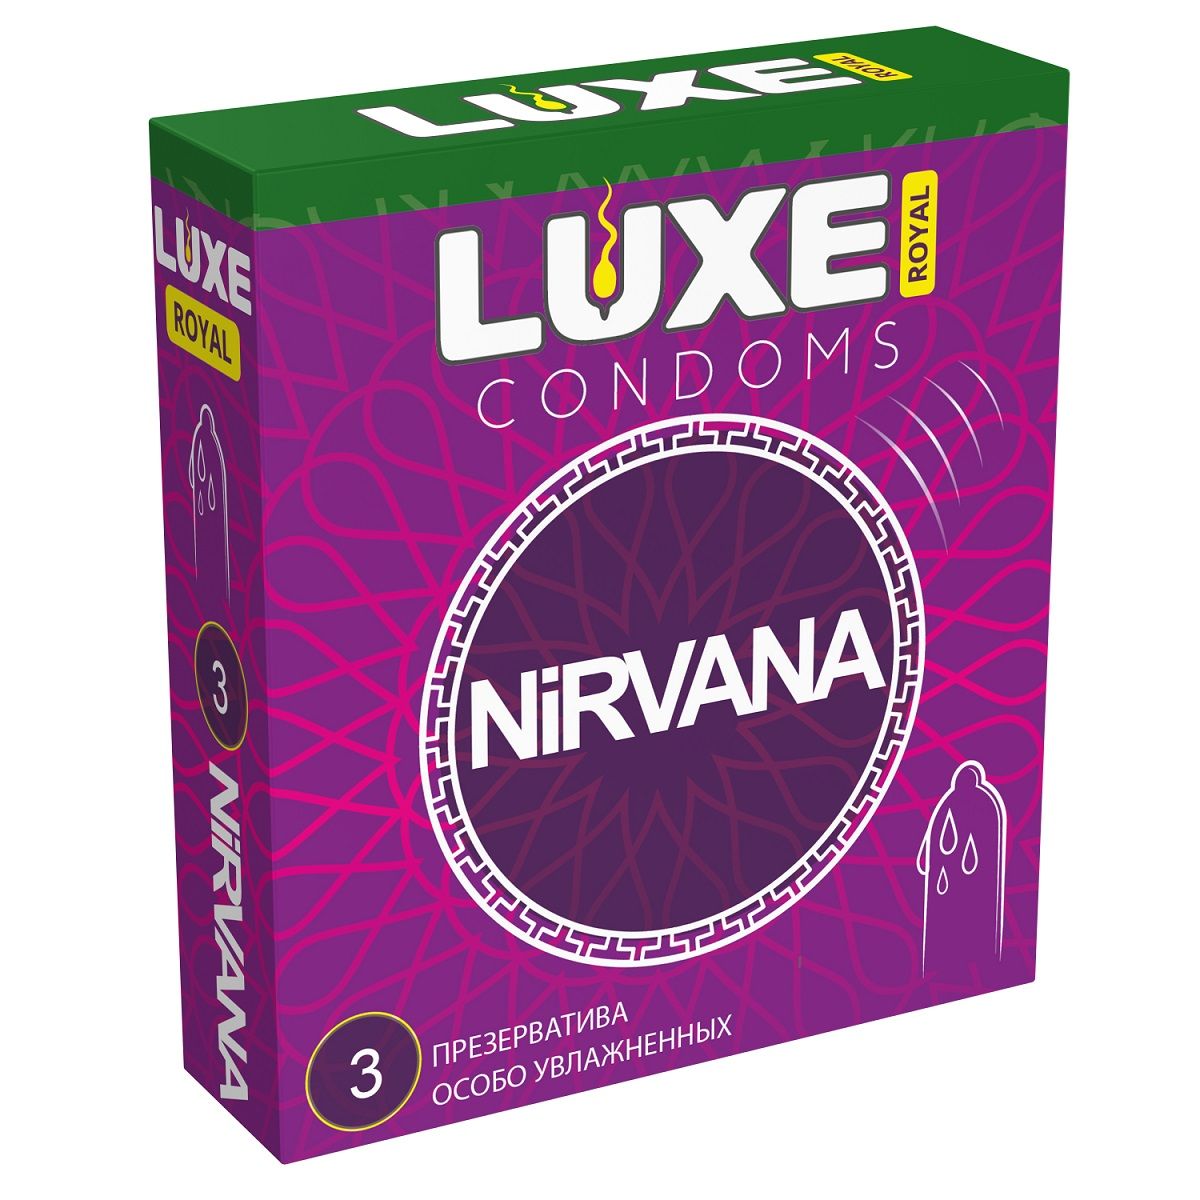      LUXE Royal Nirvana - 3 .